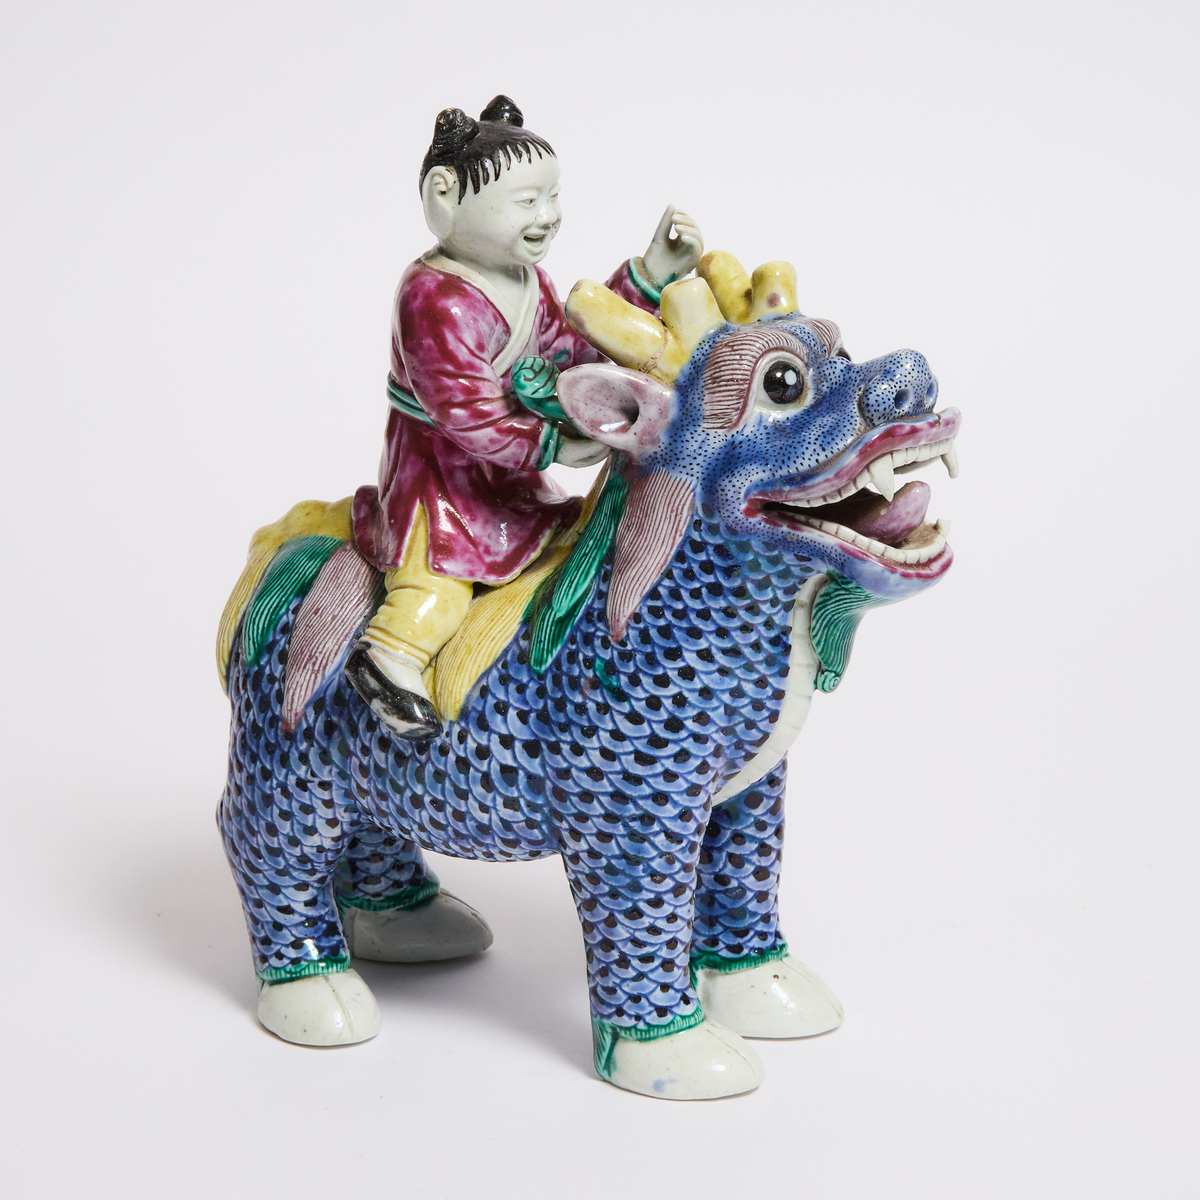 A Chinese Export Porcelain Figure of a Boy Riding a Qilin, 19th Century, 清 十九世纪 麒麟童子瓷塑, height 10.7